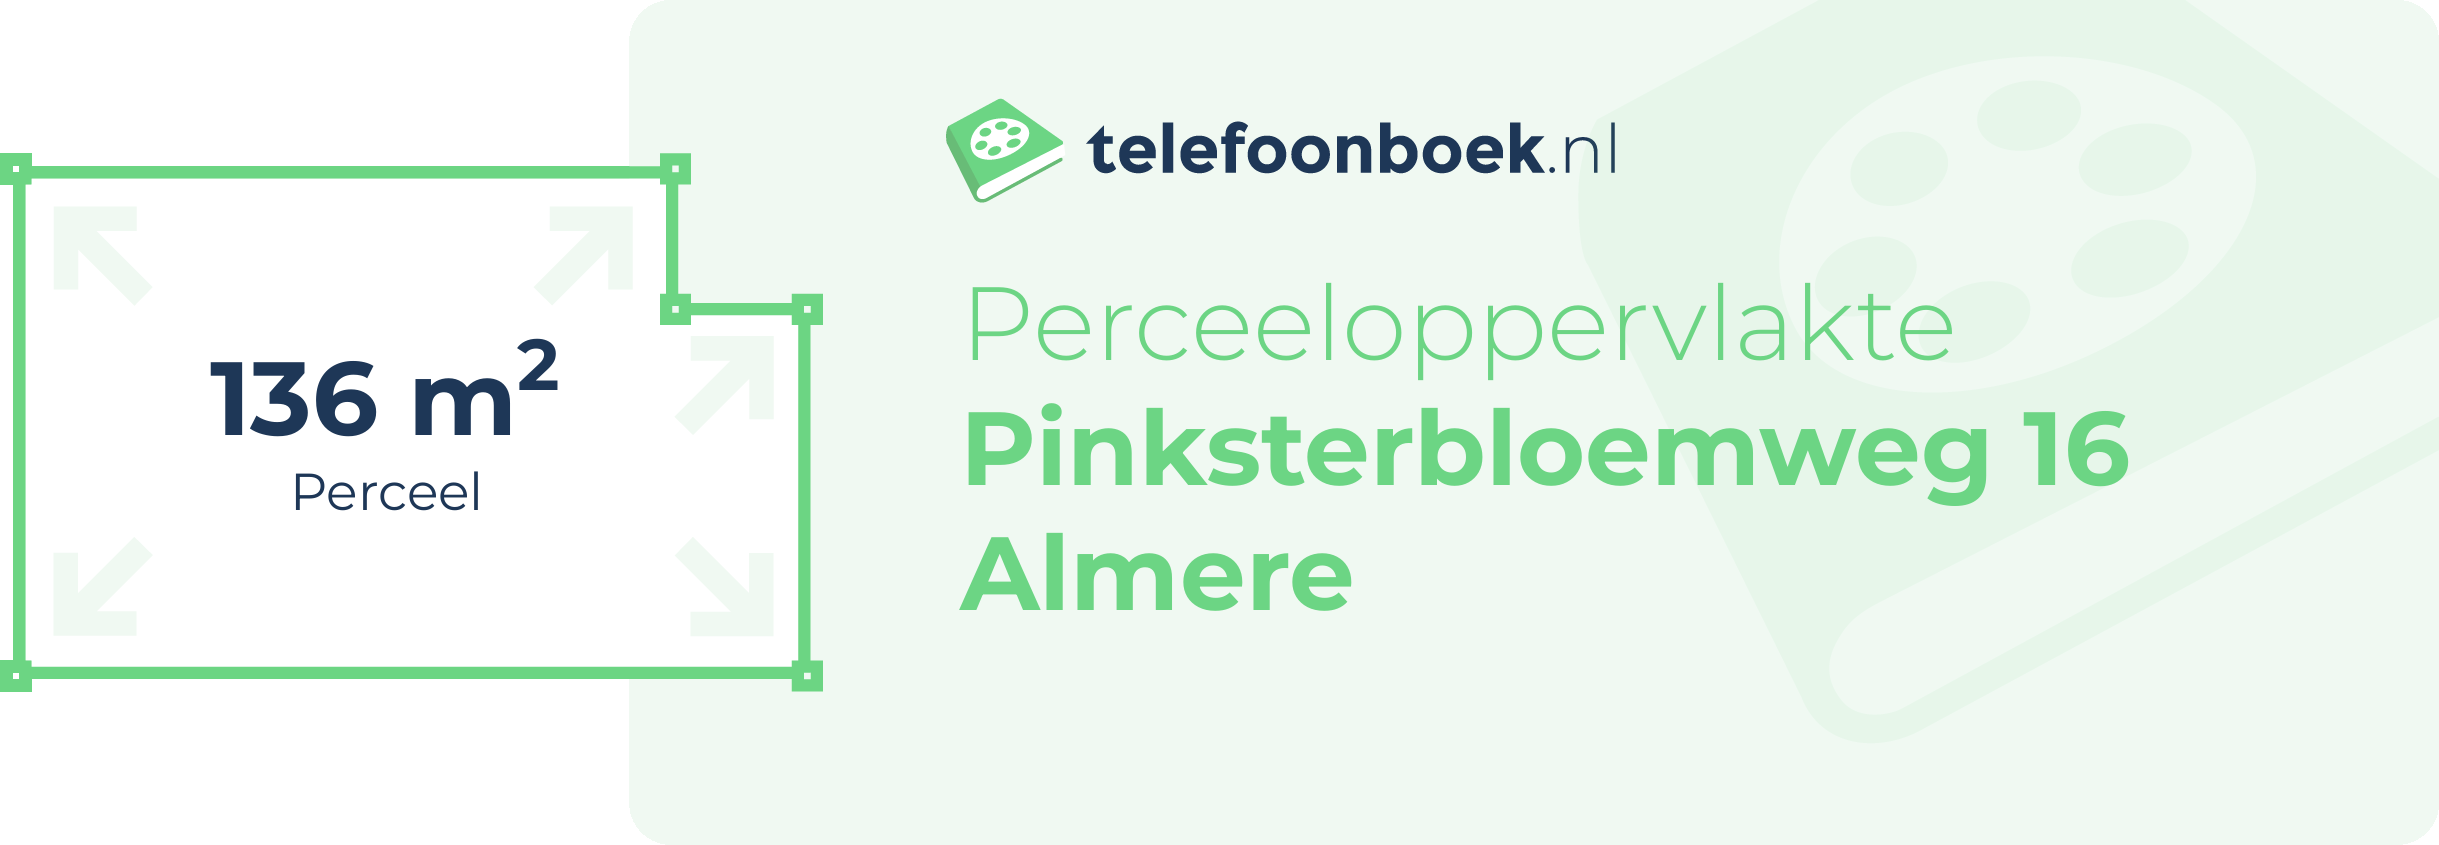 Perceeloppervlakte Pinksterbloemweg 16 Almere